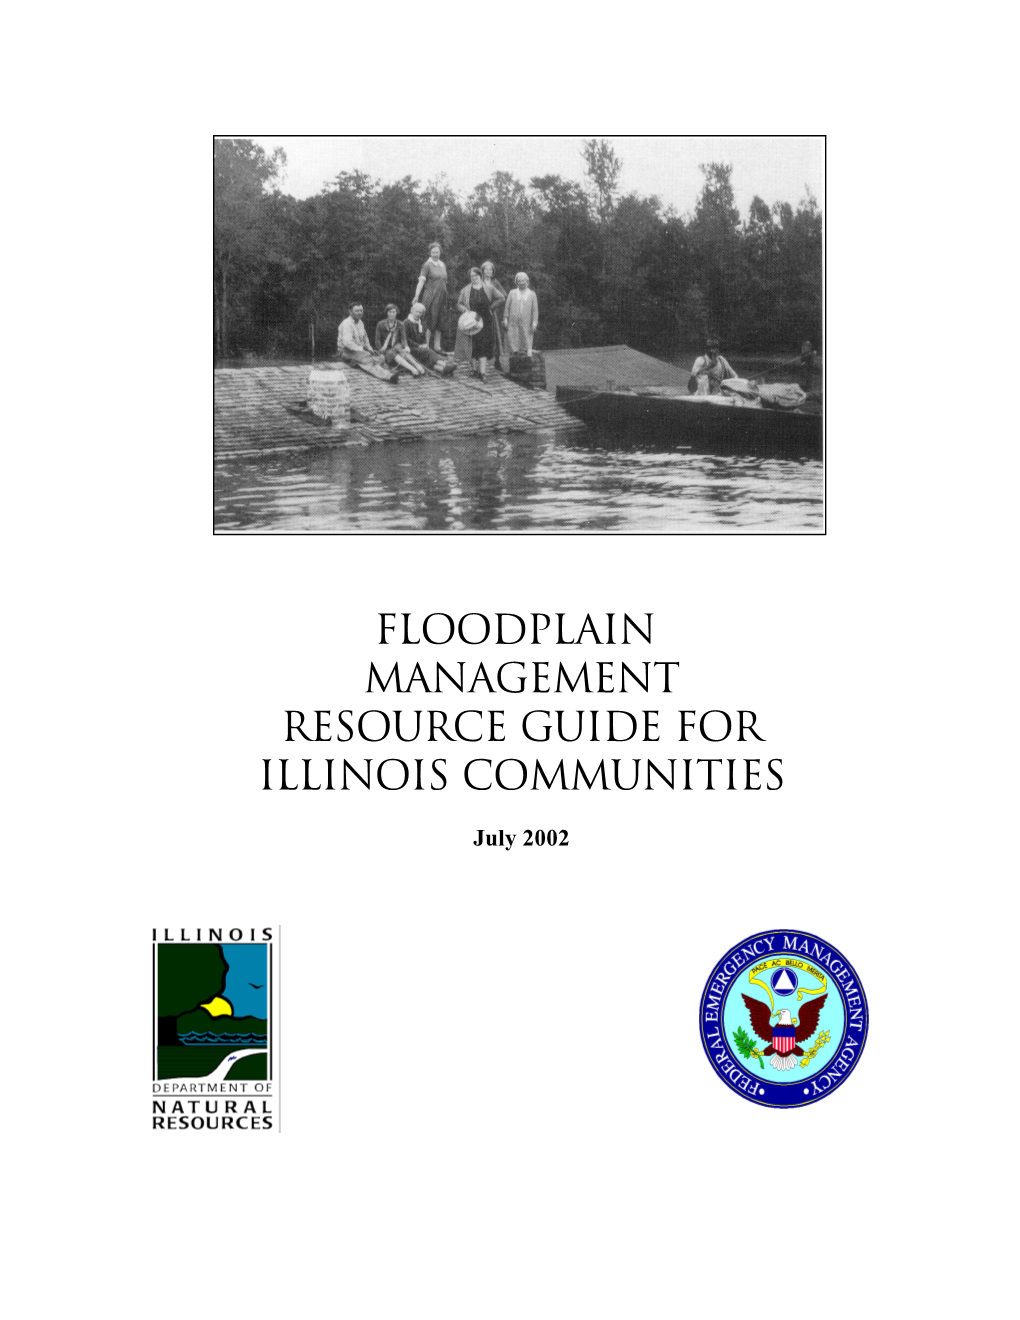 FLOODPLAIN MANAGEMENT RESOURCE GUIDE for ILLINOIS COMMUNITIES